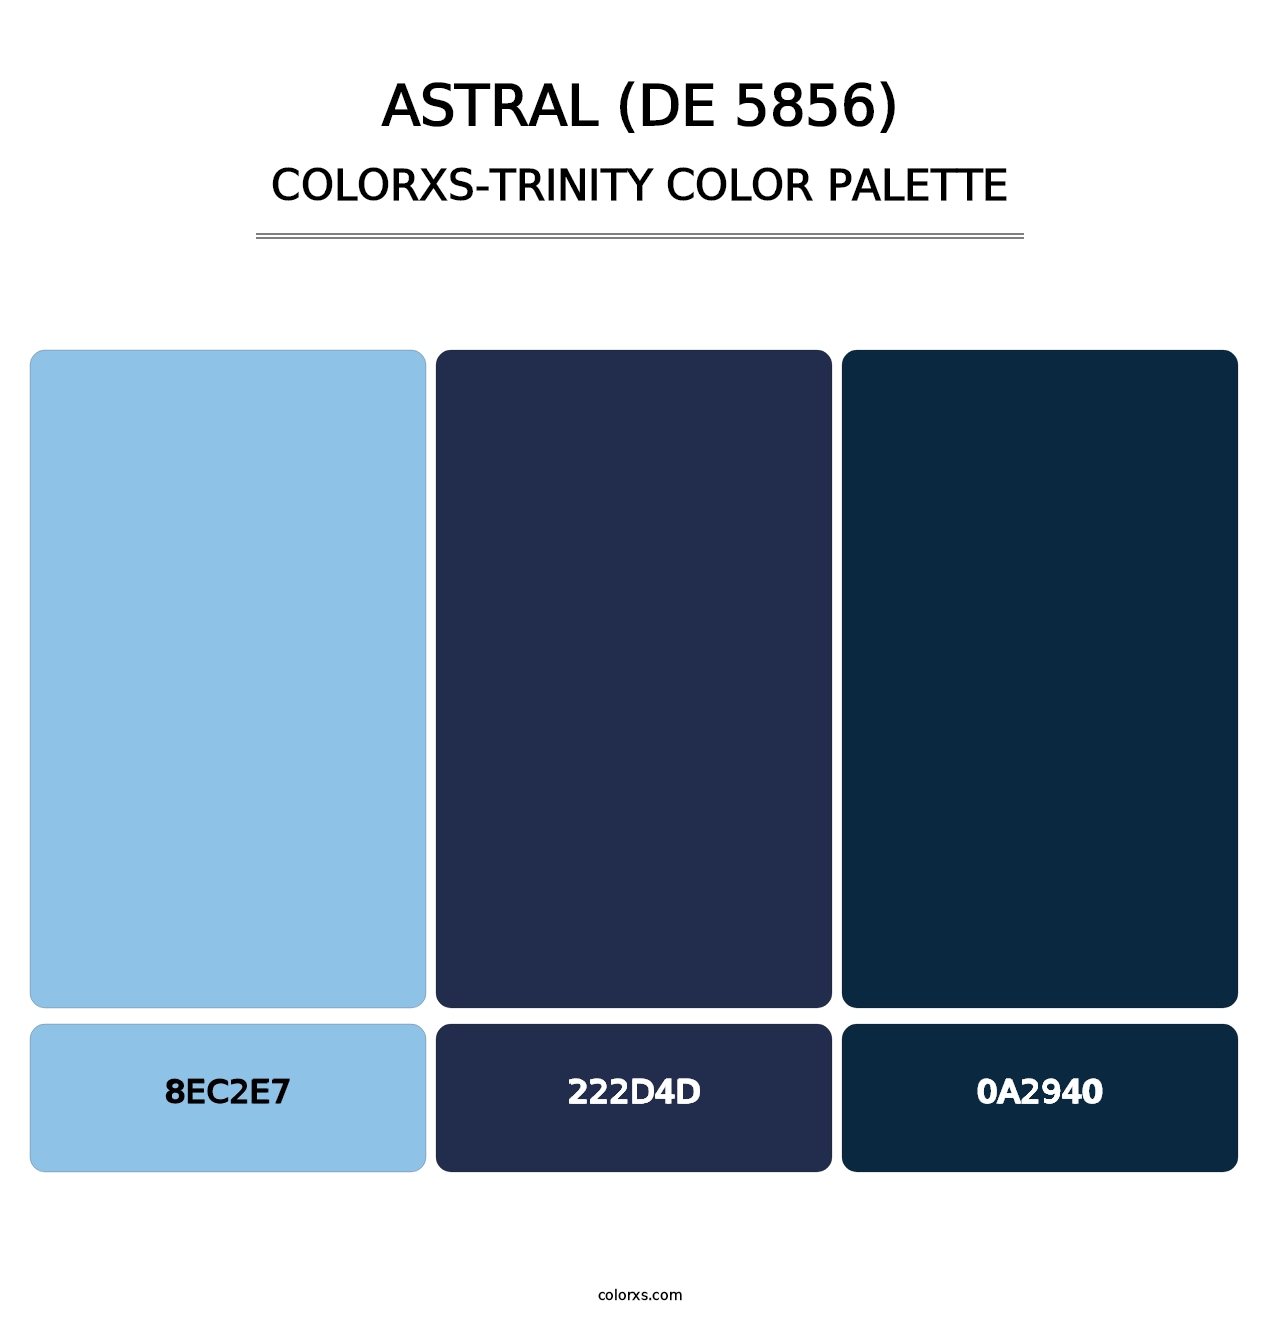 Astral (DE 5856) - Colorxs Trinity Palette